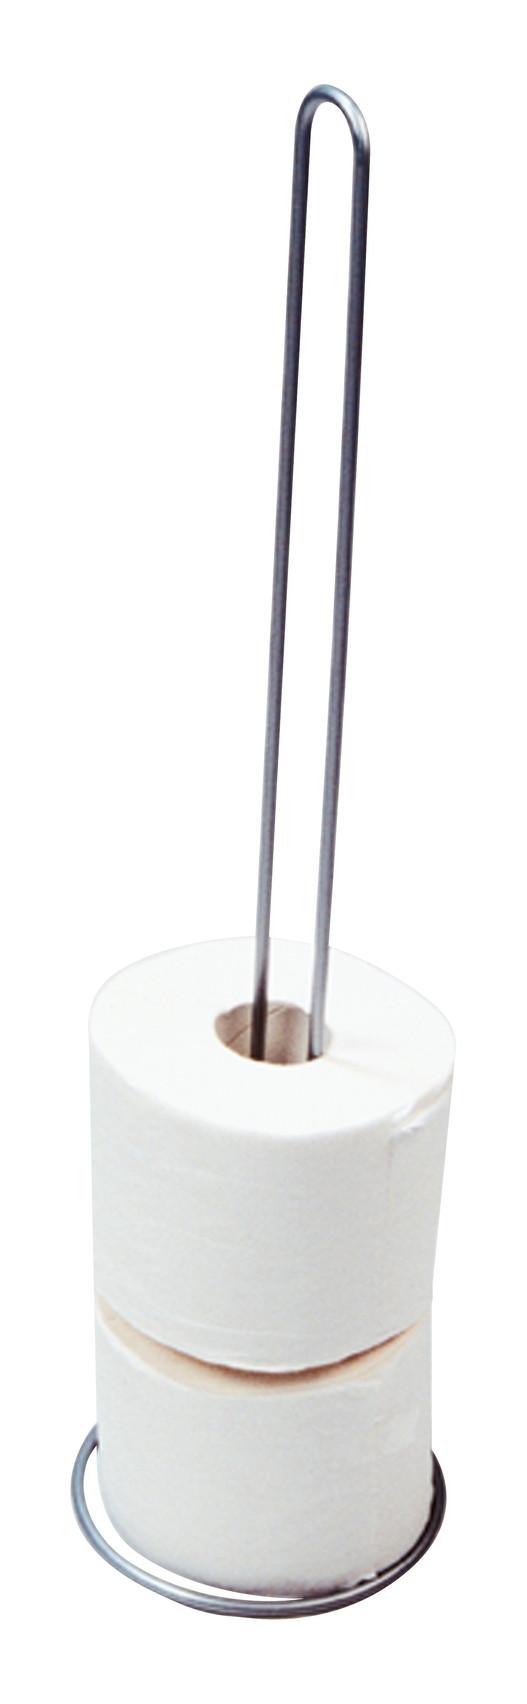 Držák Na Toaletní Papír Toilettenpapierhalter 15729100 - barvy chromu, Konvenční, kov (56cm) - Wenko